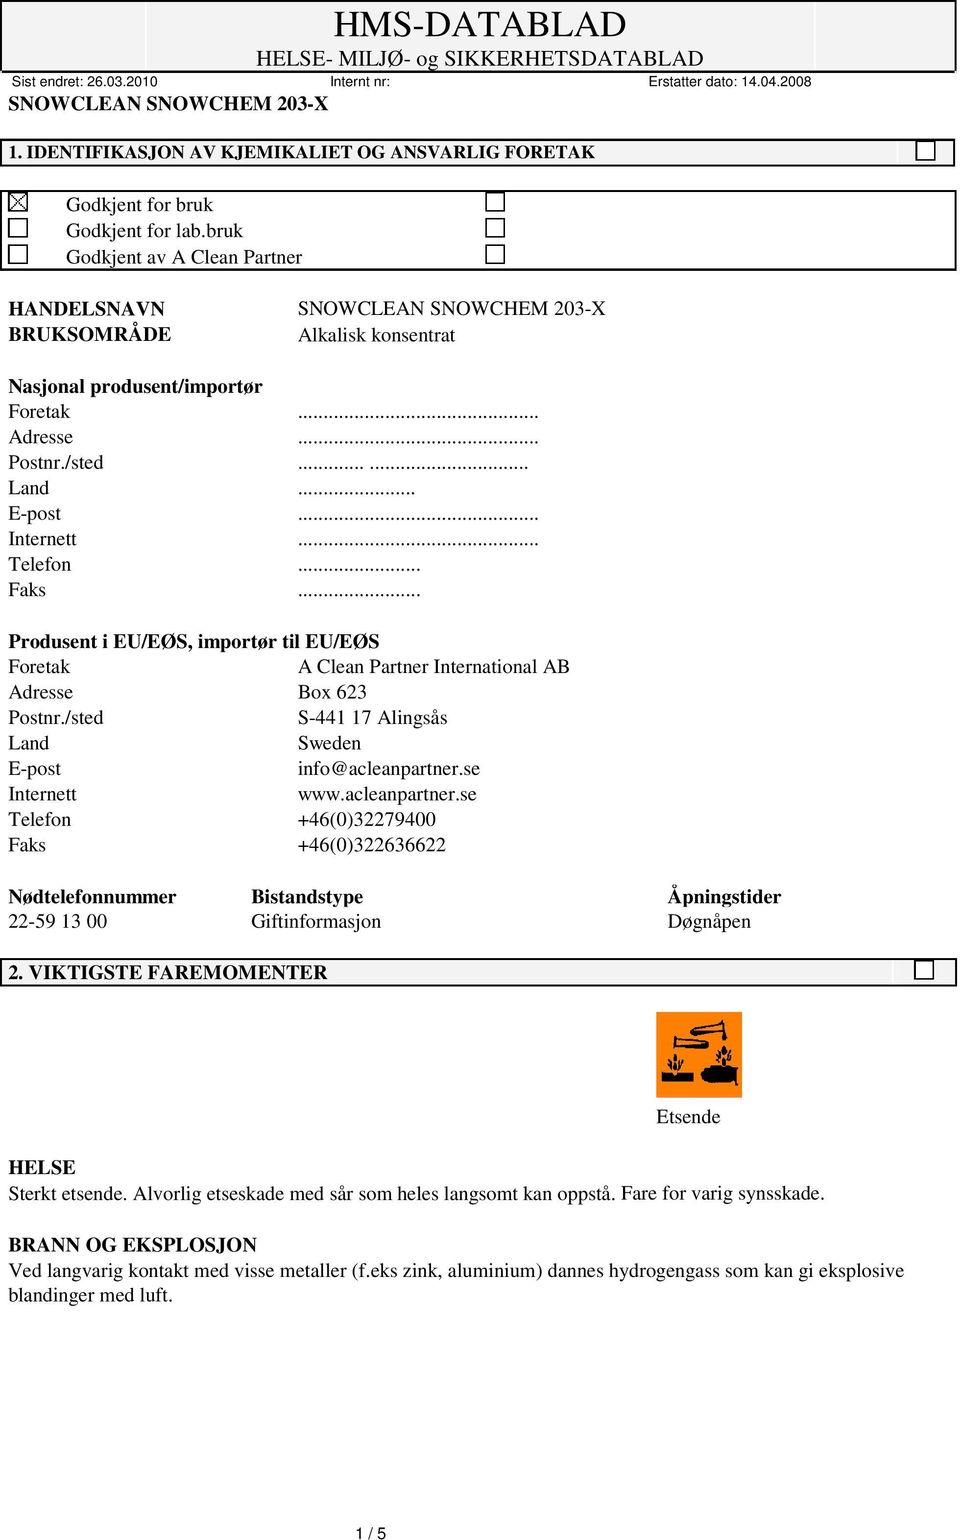 .. Produsent i EU/EØS, importør til EU/EØS Foretak A Clean Partner International AB Adresse Box 623 Postnr./sted S-441 17 Alingsås Land Sweden E-post info@acleanpartner.